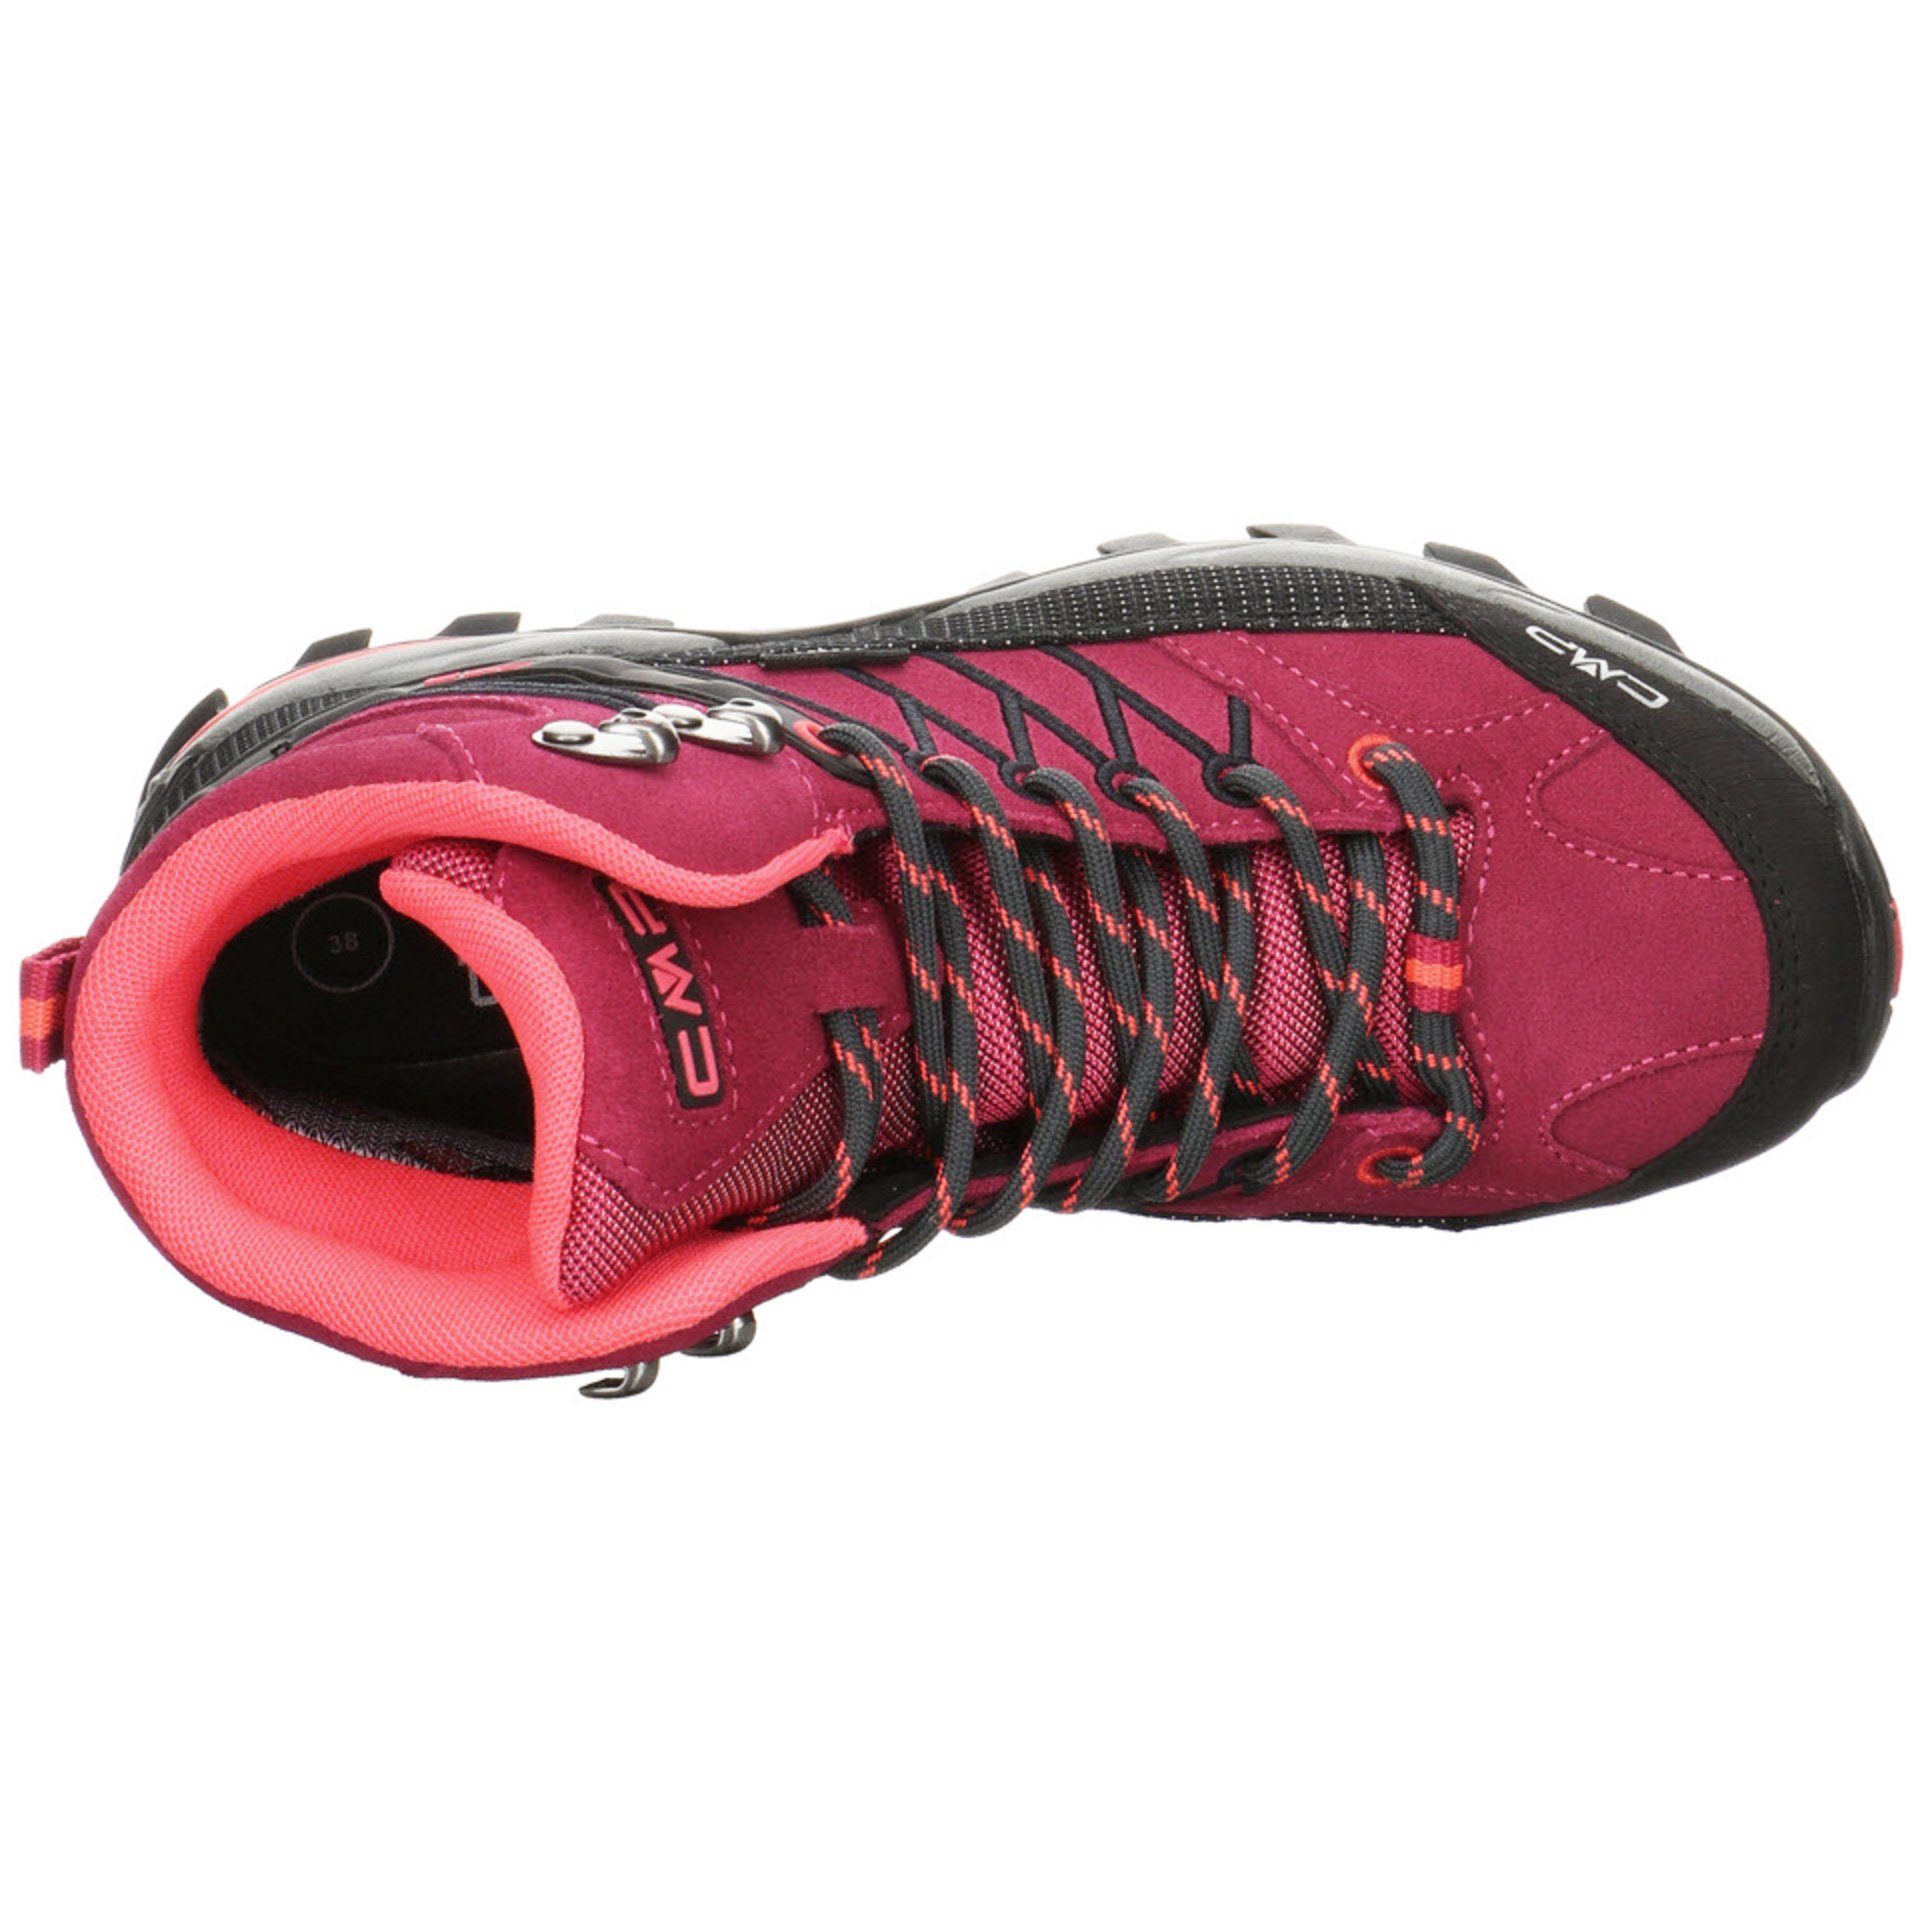 CMP Damen Schuhe Outdoorschuh Outdoorschuh Outdoor Mid Leder-/Textilkombination MAGENTA-ANTRACITE Rigel